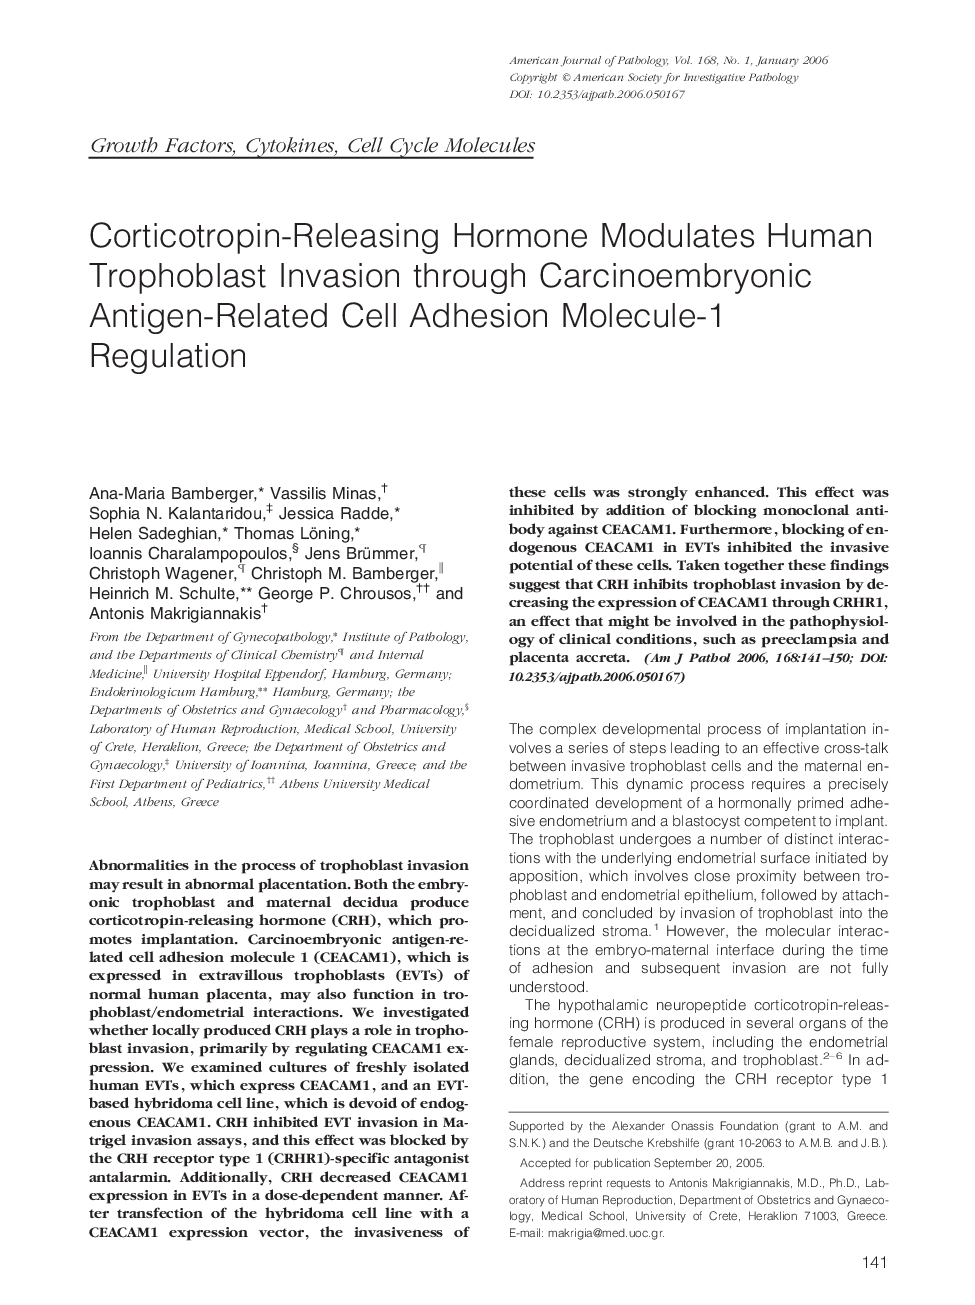 Regular ArticlesCorticotropin-Releasing Hormone Modulates Human Trophoblast Invasion through Carcinoembryonic Antigen-Related Cell Adhesion Molecule-1 Regulation